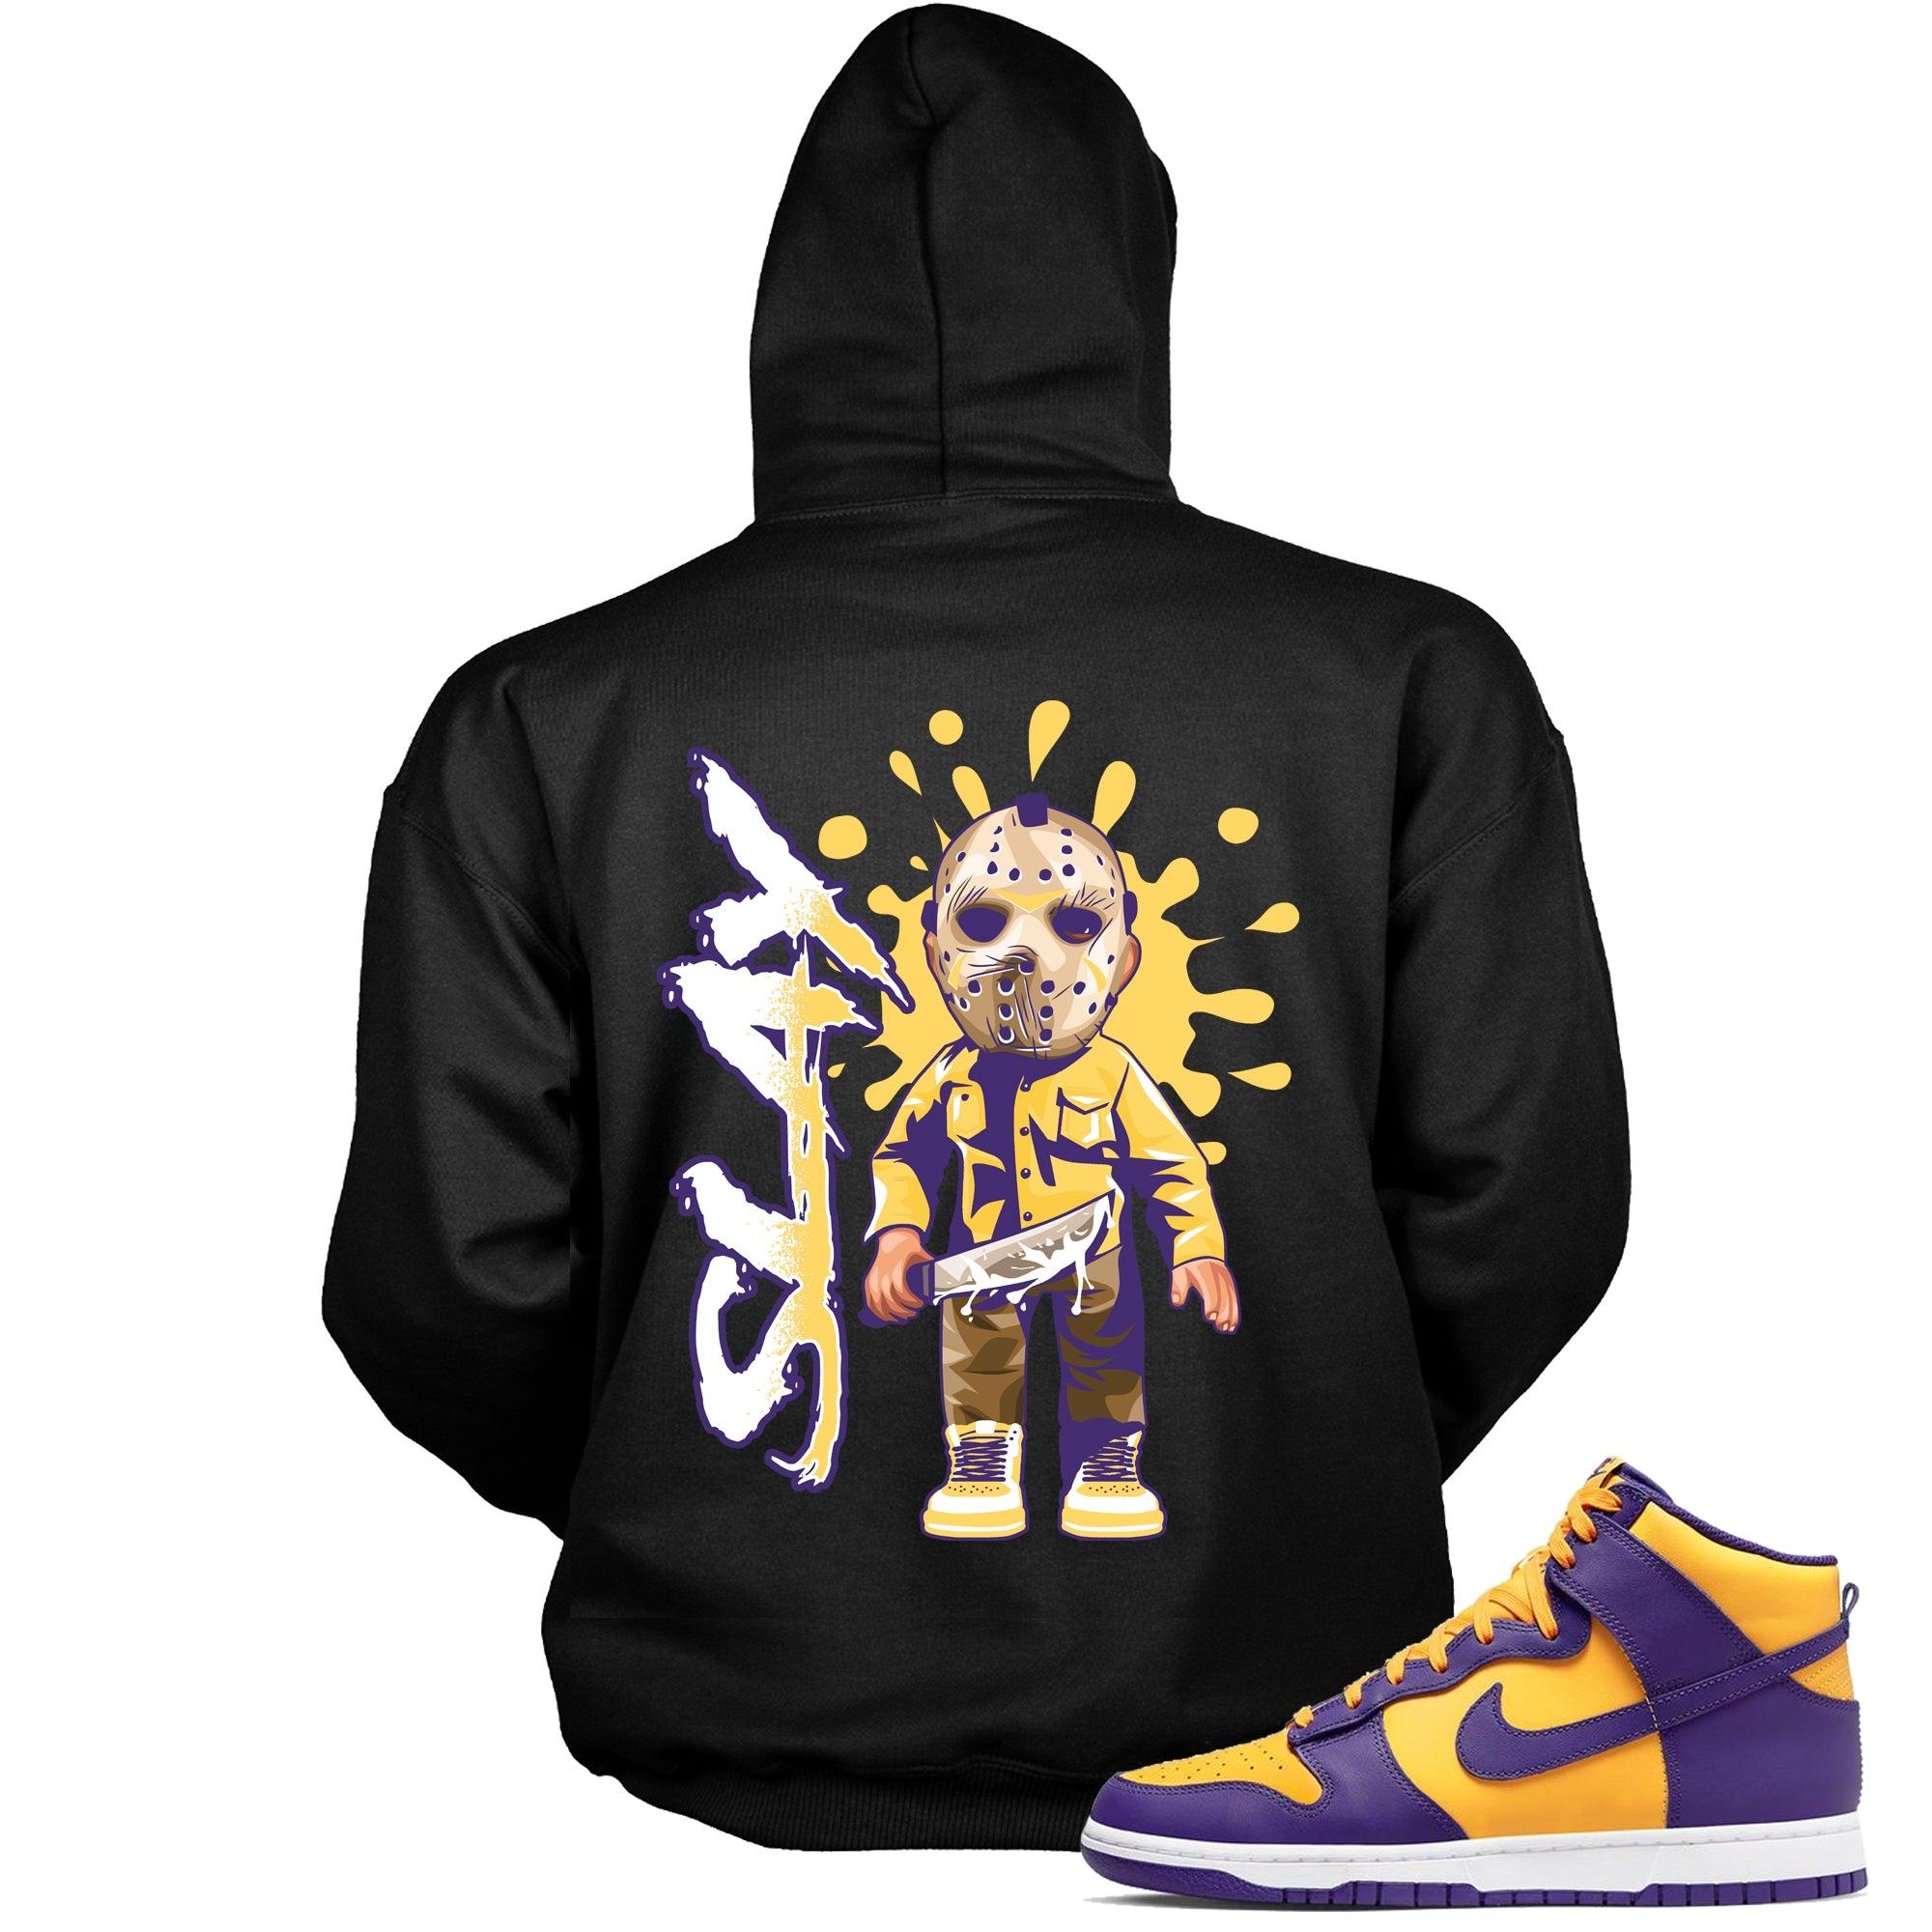 Nike Dunk High Lakers Hoodie - Slay